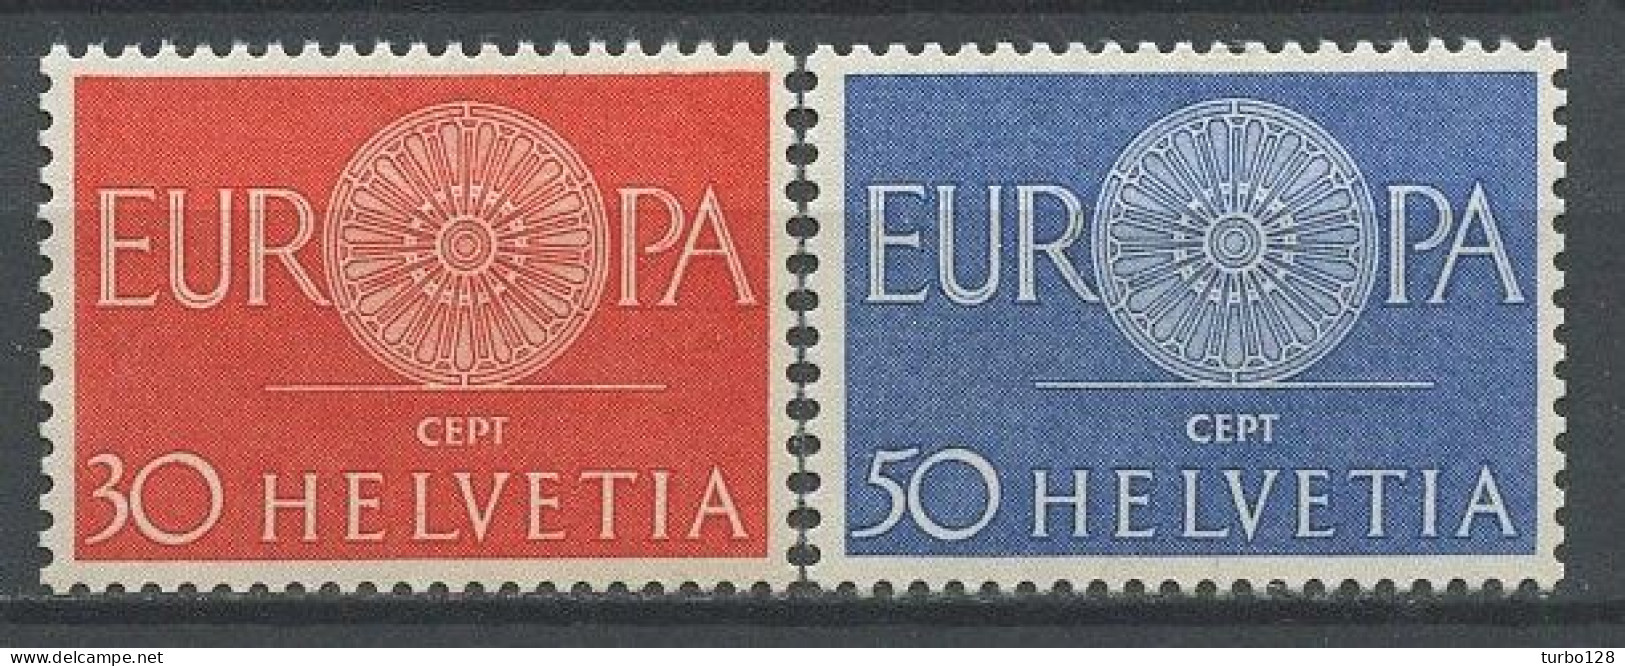 SUISSE 1960 N° 666/667 ** Neufs MNH Superbes C 1.75 € Europa - Nuevos